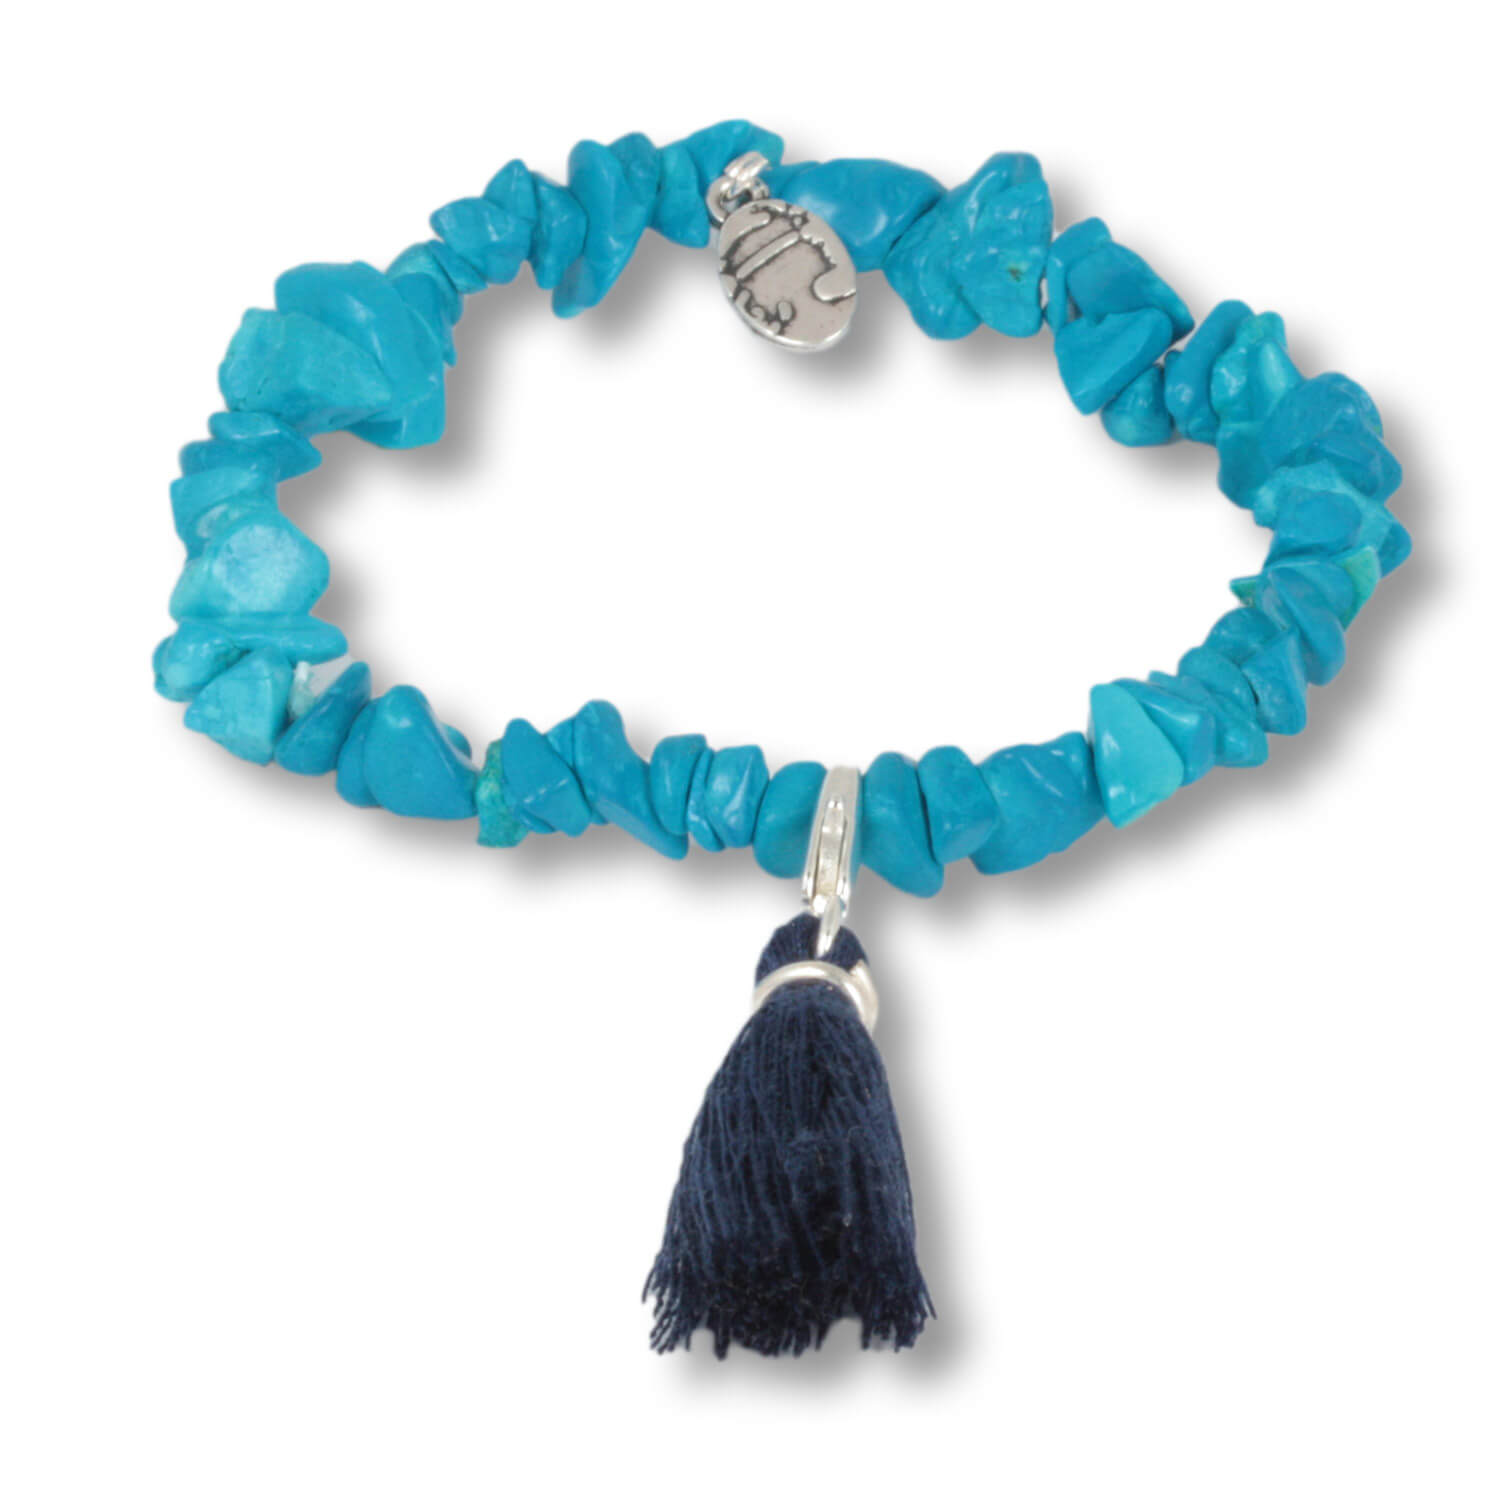 Caribic Blue - Ocean Daughters gemstone bracelet from Howlith